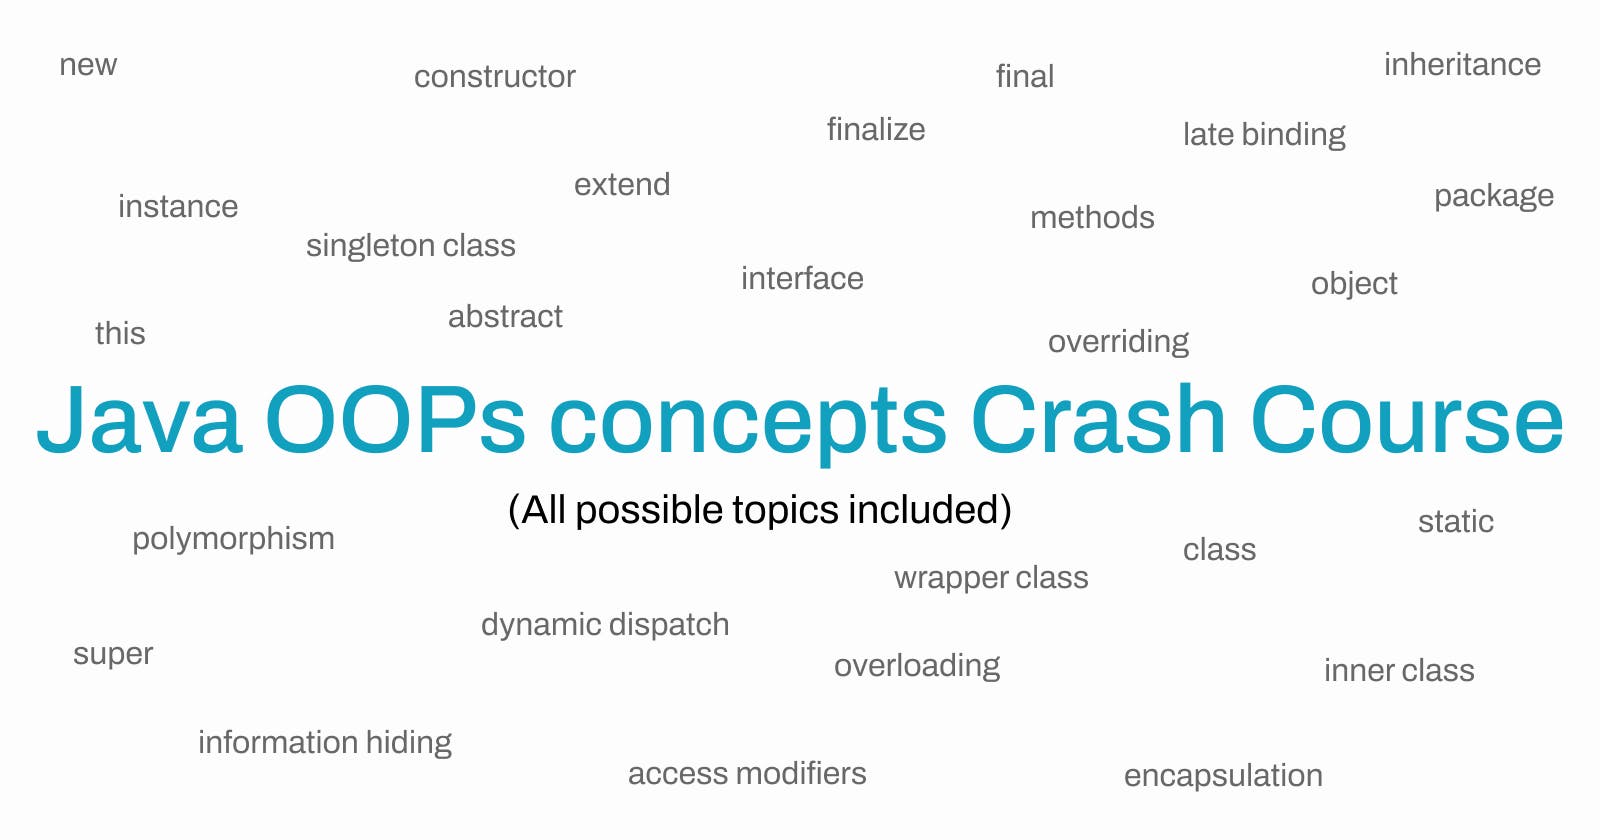 Java OOPs concepts Crash Course